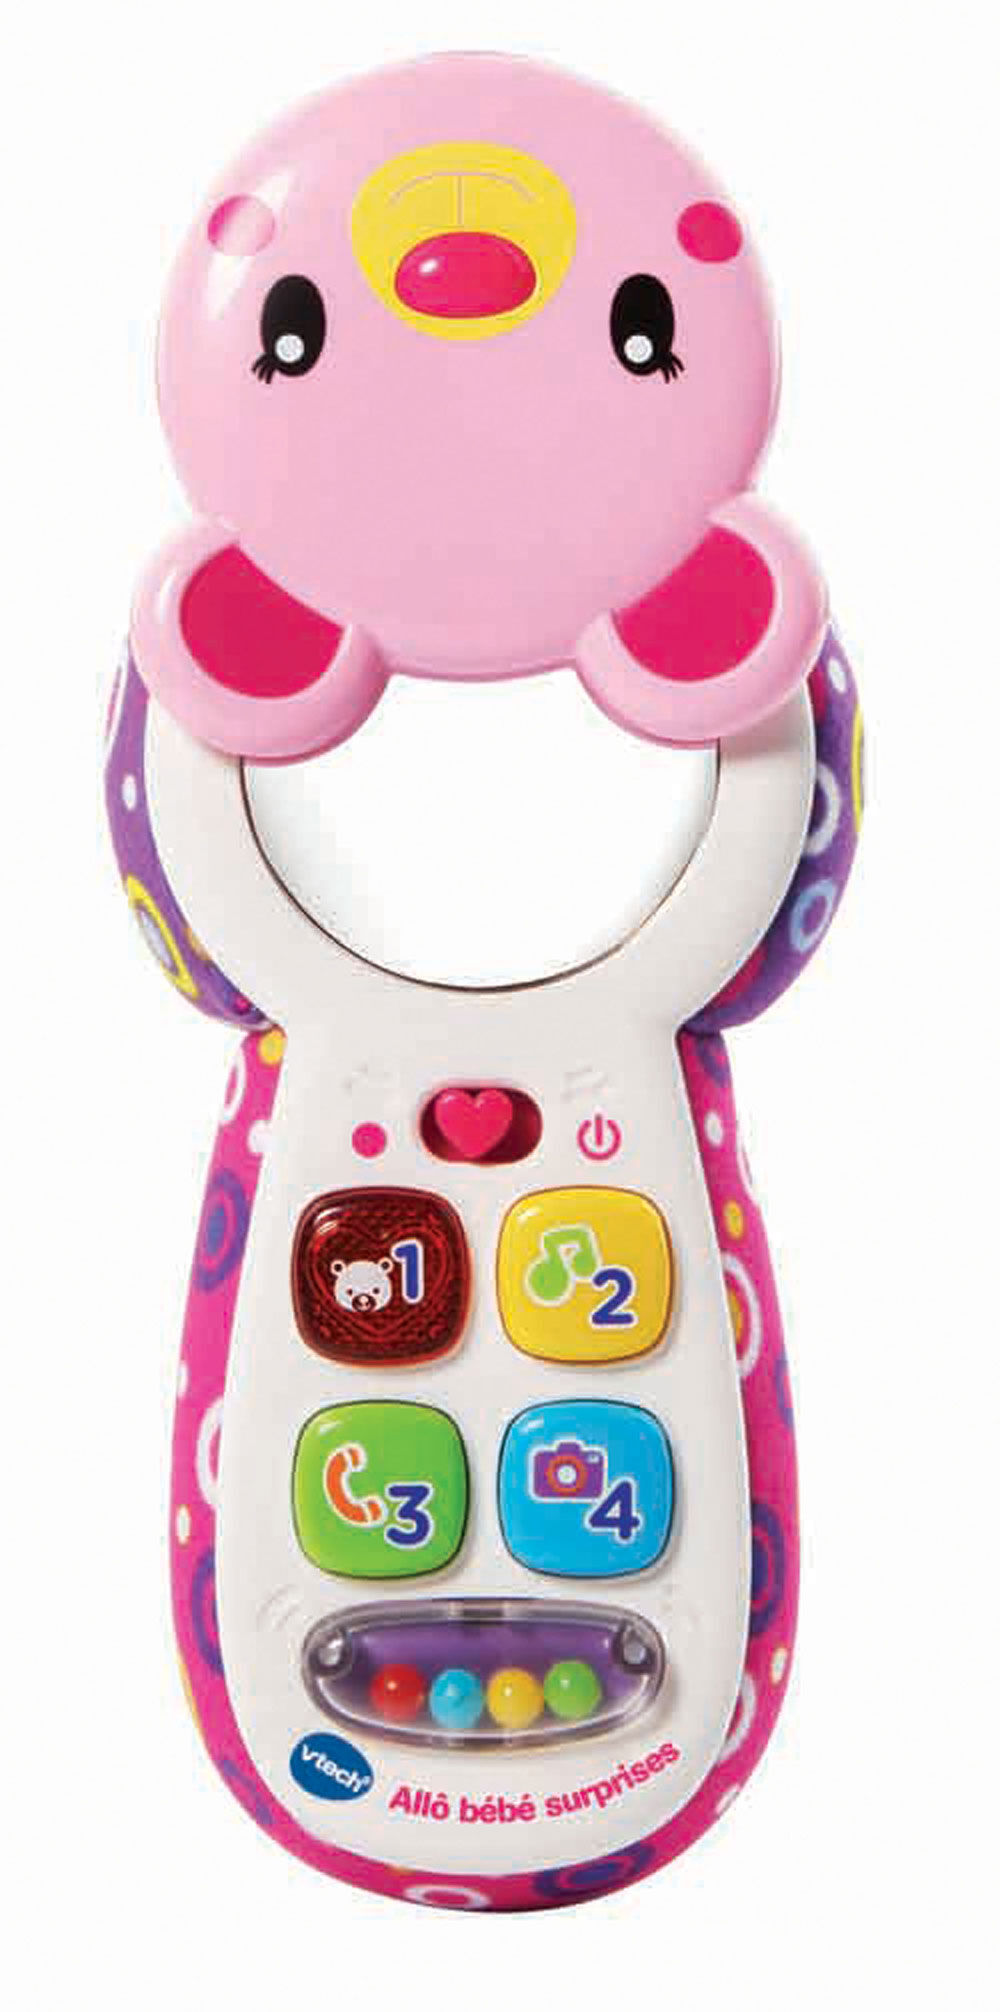 vtech peek a bear baby phone